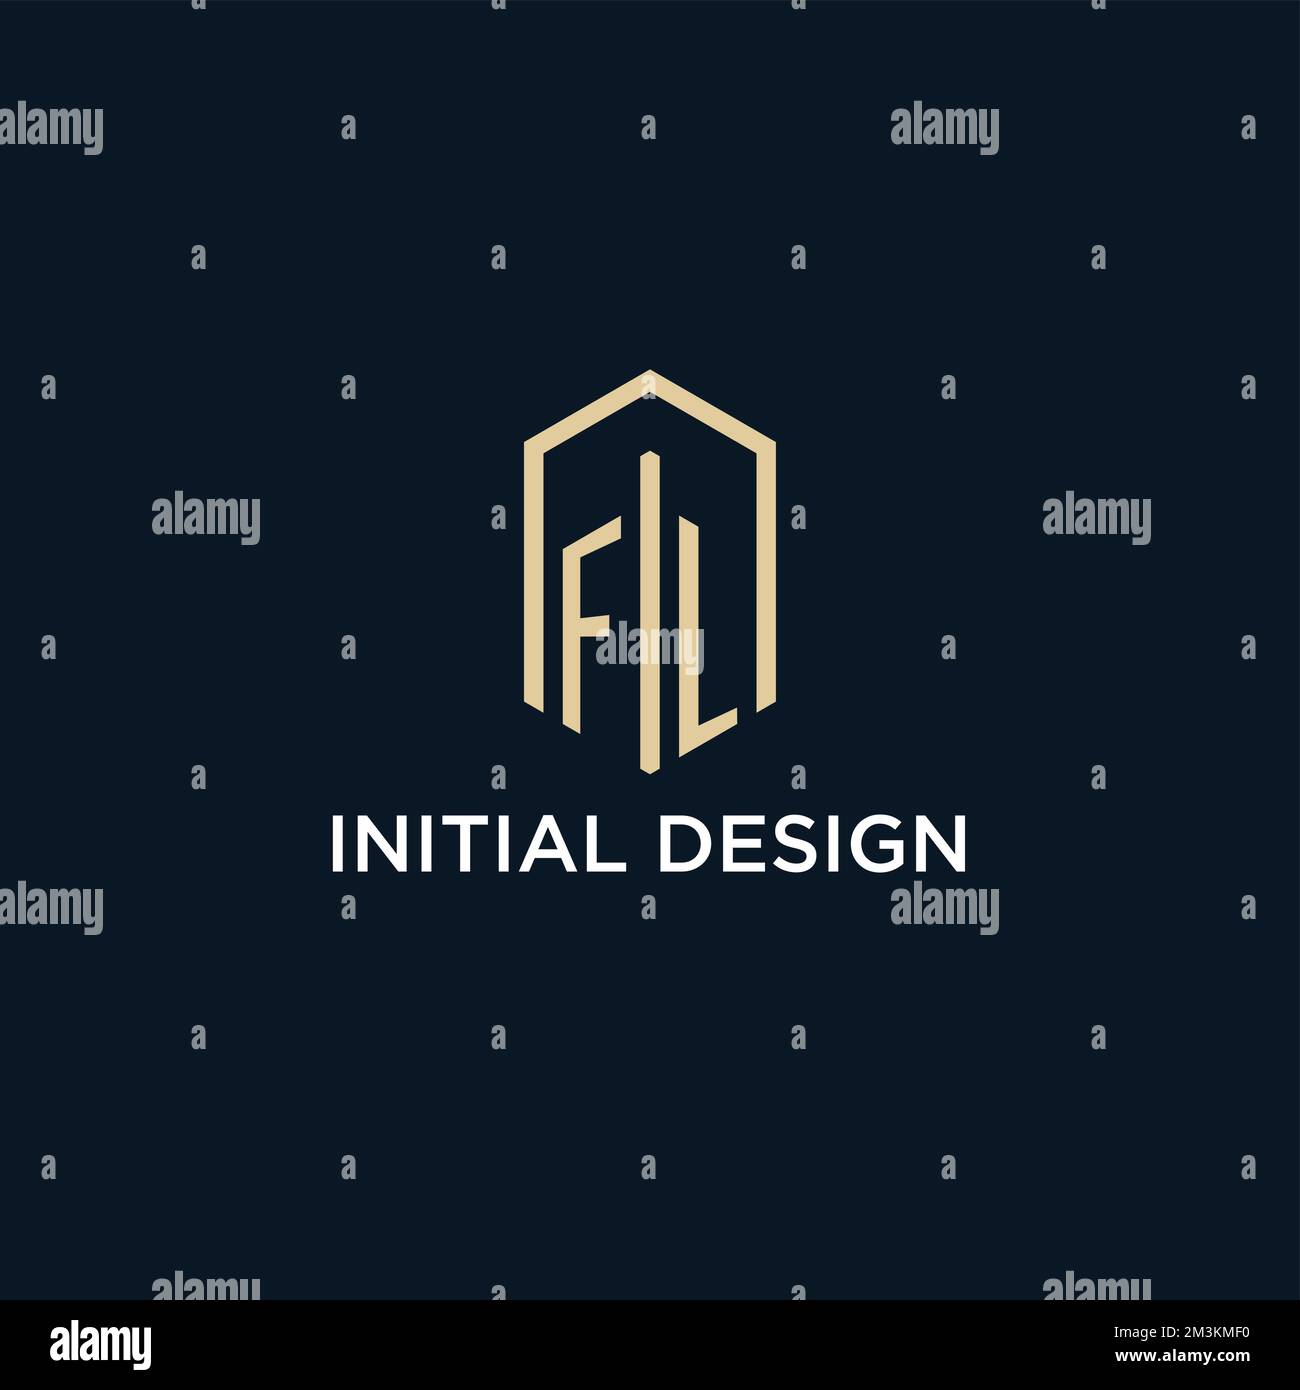 FL initial monogram logo with hexagonal shape style, real estate logo design ideas inspiration vector Stock Vector